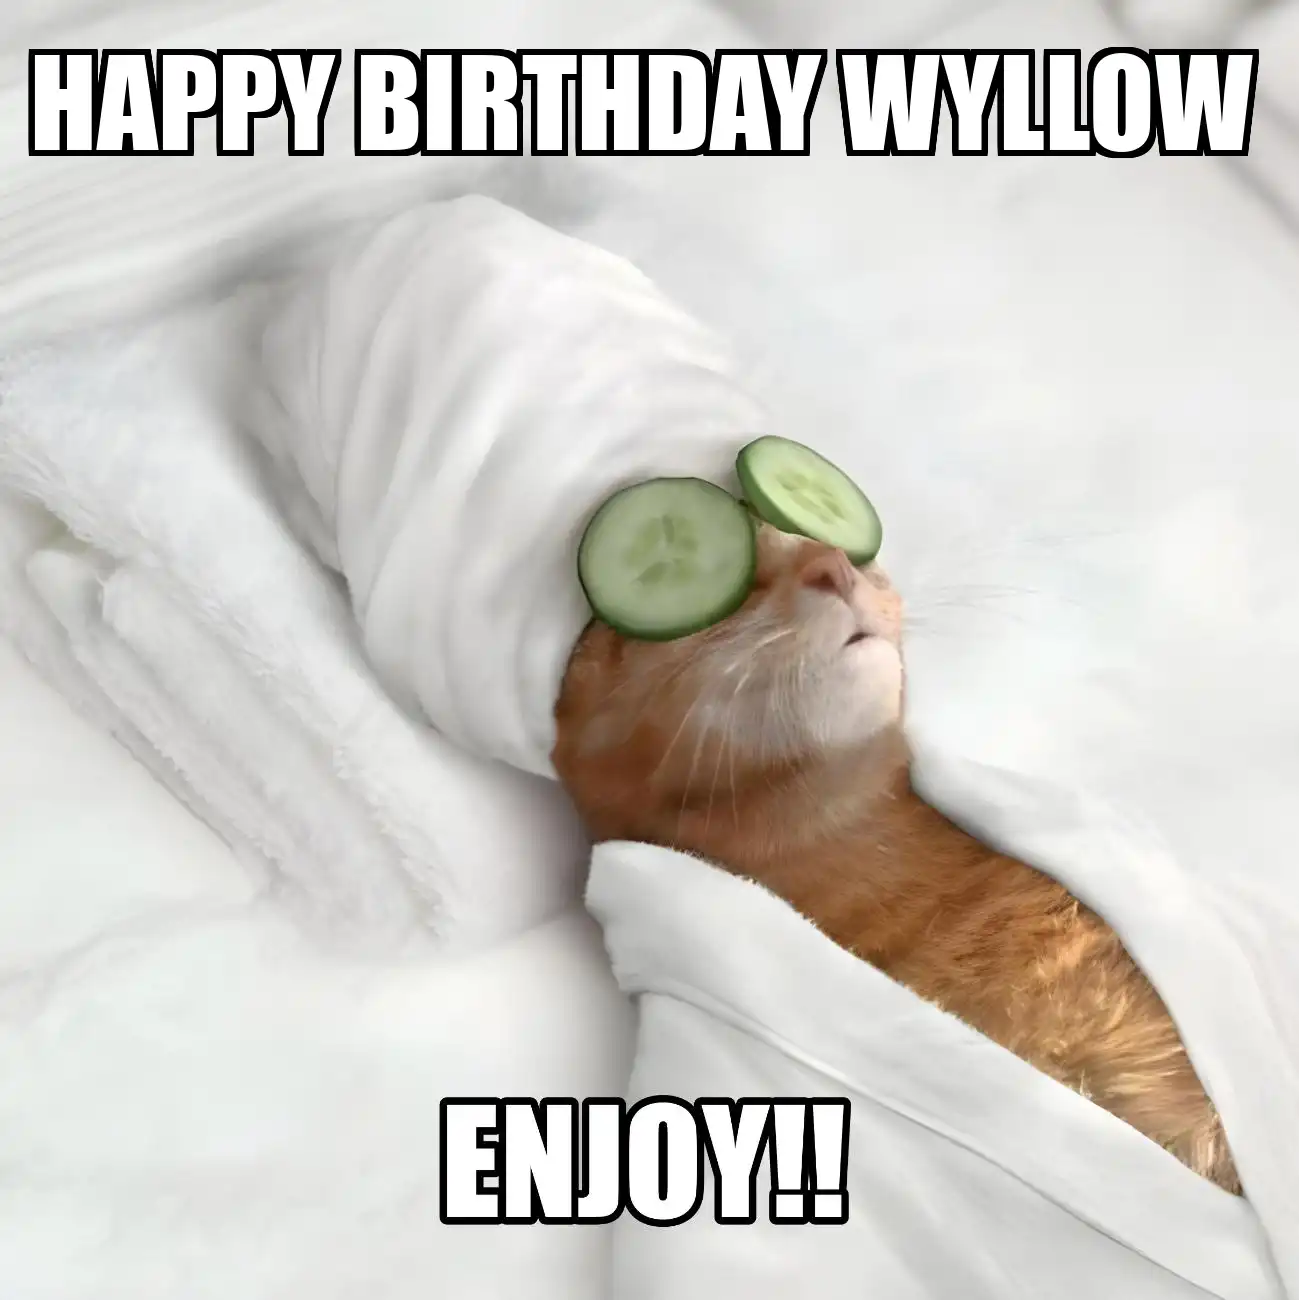 Happy Birthday Wyllow Enjoy Cat Meme